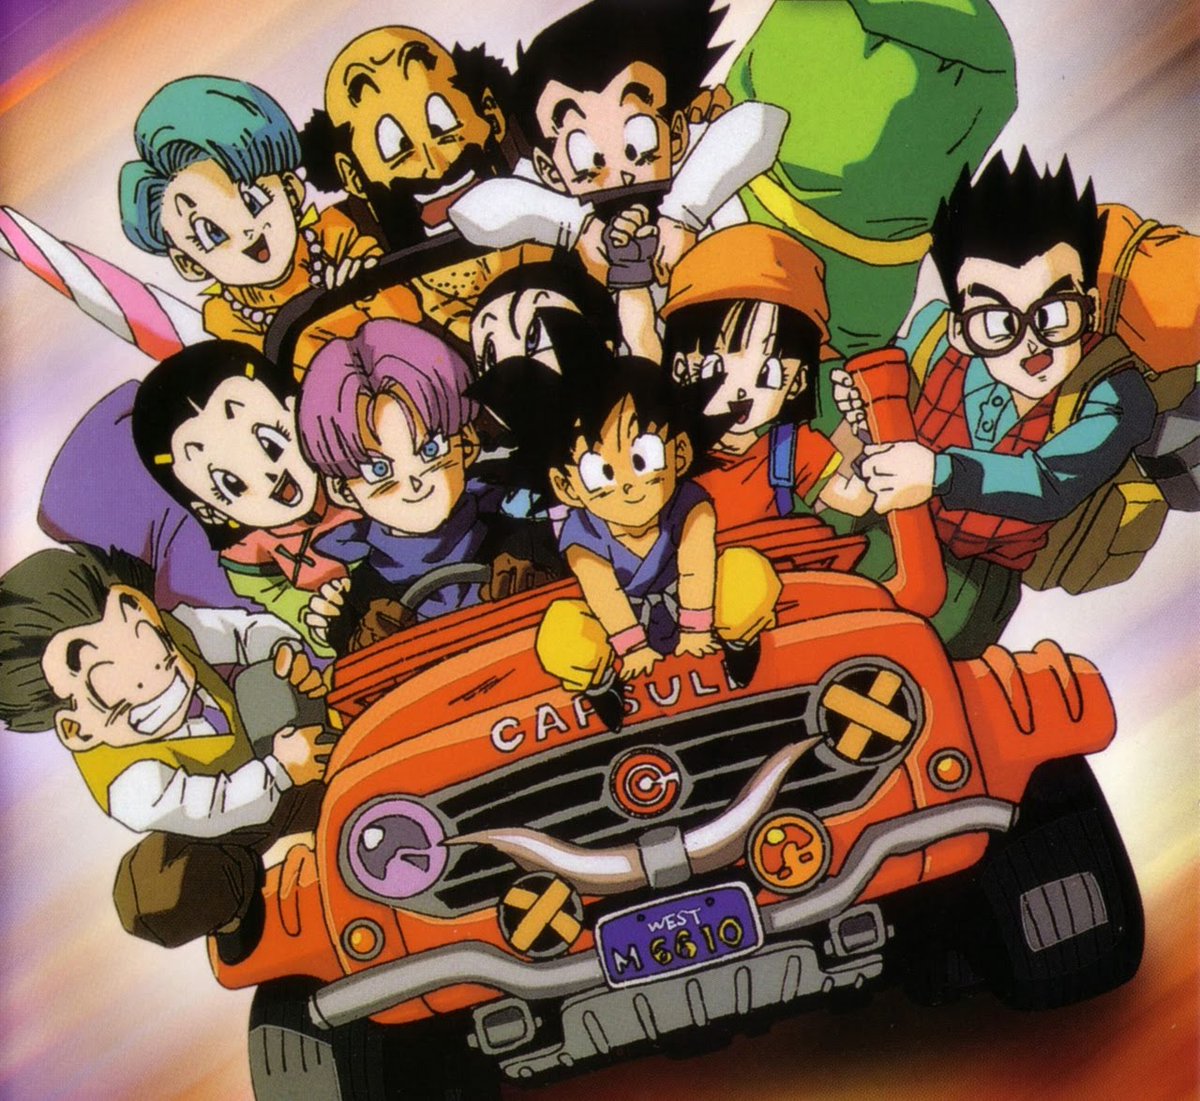 Dragon Ball Z ~X~ Dragon Ball   GT 

West M3610 -X- West M6610 Automobile
#DragonBall #DragonBallZ #DragonBallGT #Dbz #Retro #Shueisha #Toeianimation #vintage #90sanimestyle #Goku #RedRibbon #Furusawa